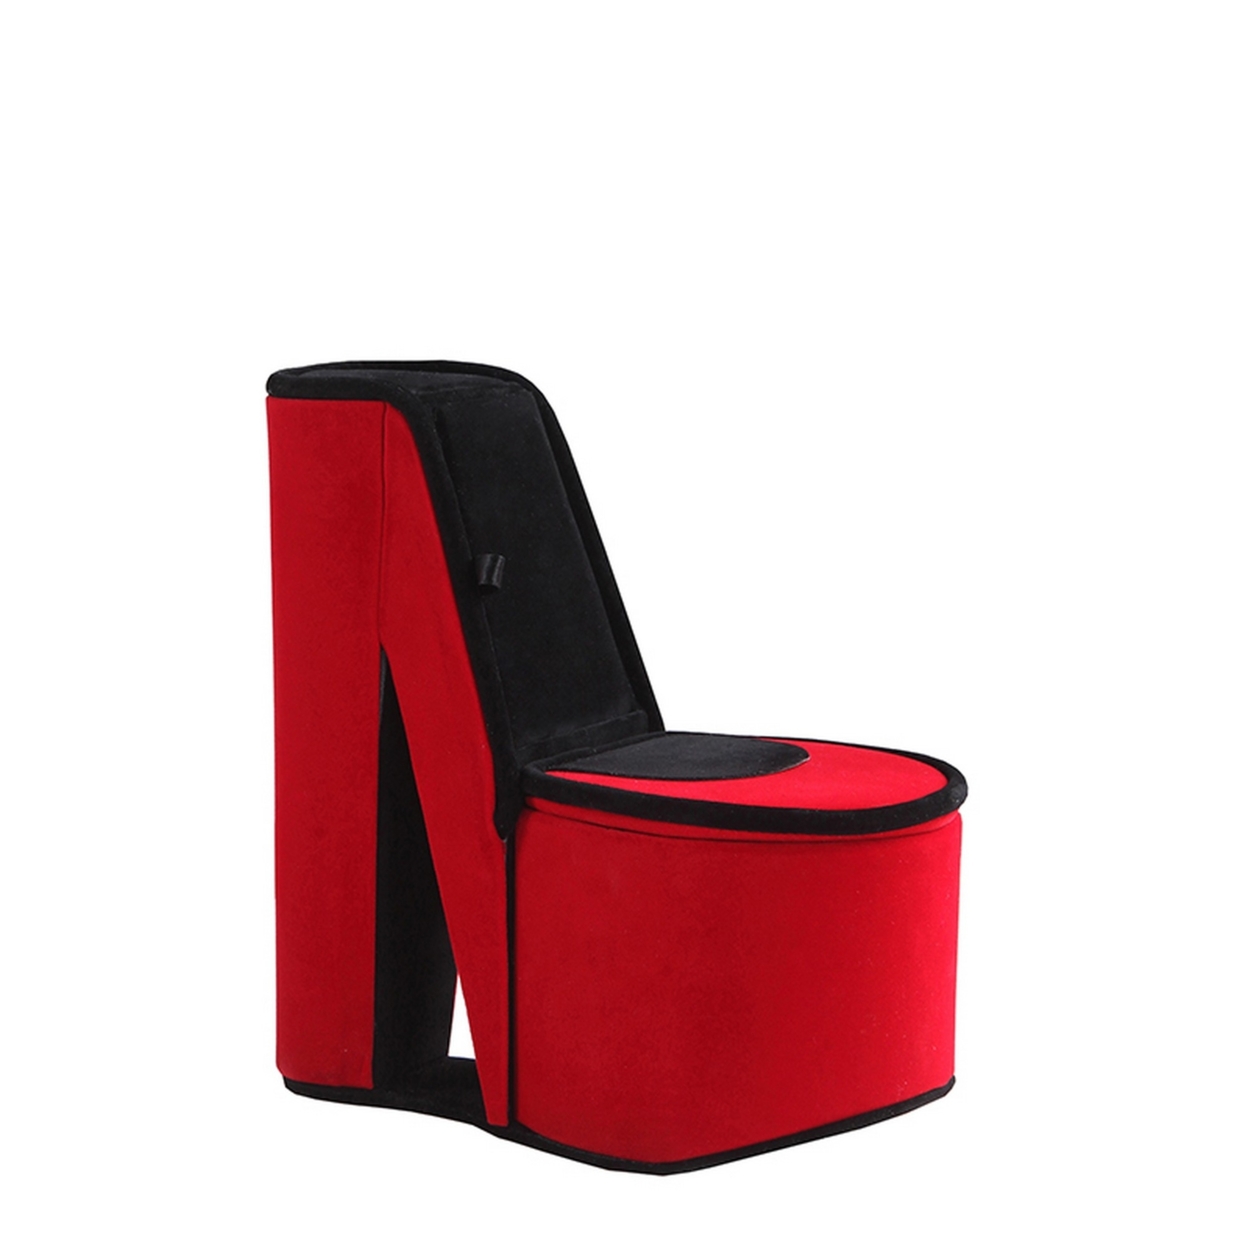 High Heel Shoe Jewelry Box With 2 Hooks And Storage, Red- Saltoro Sherpi